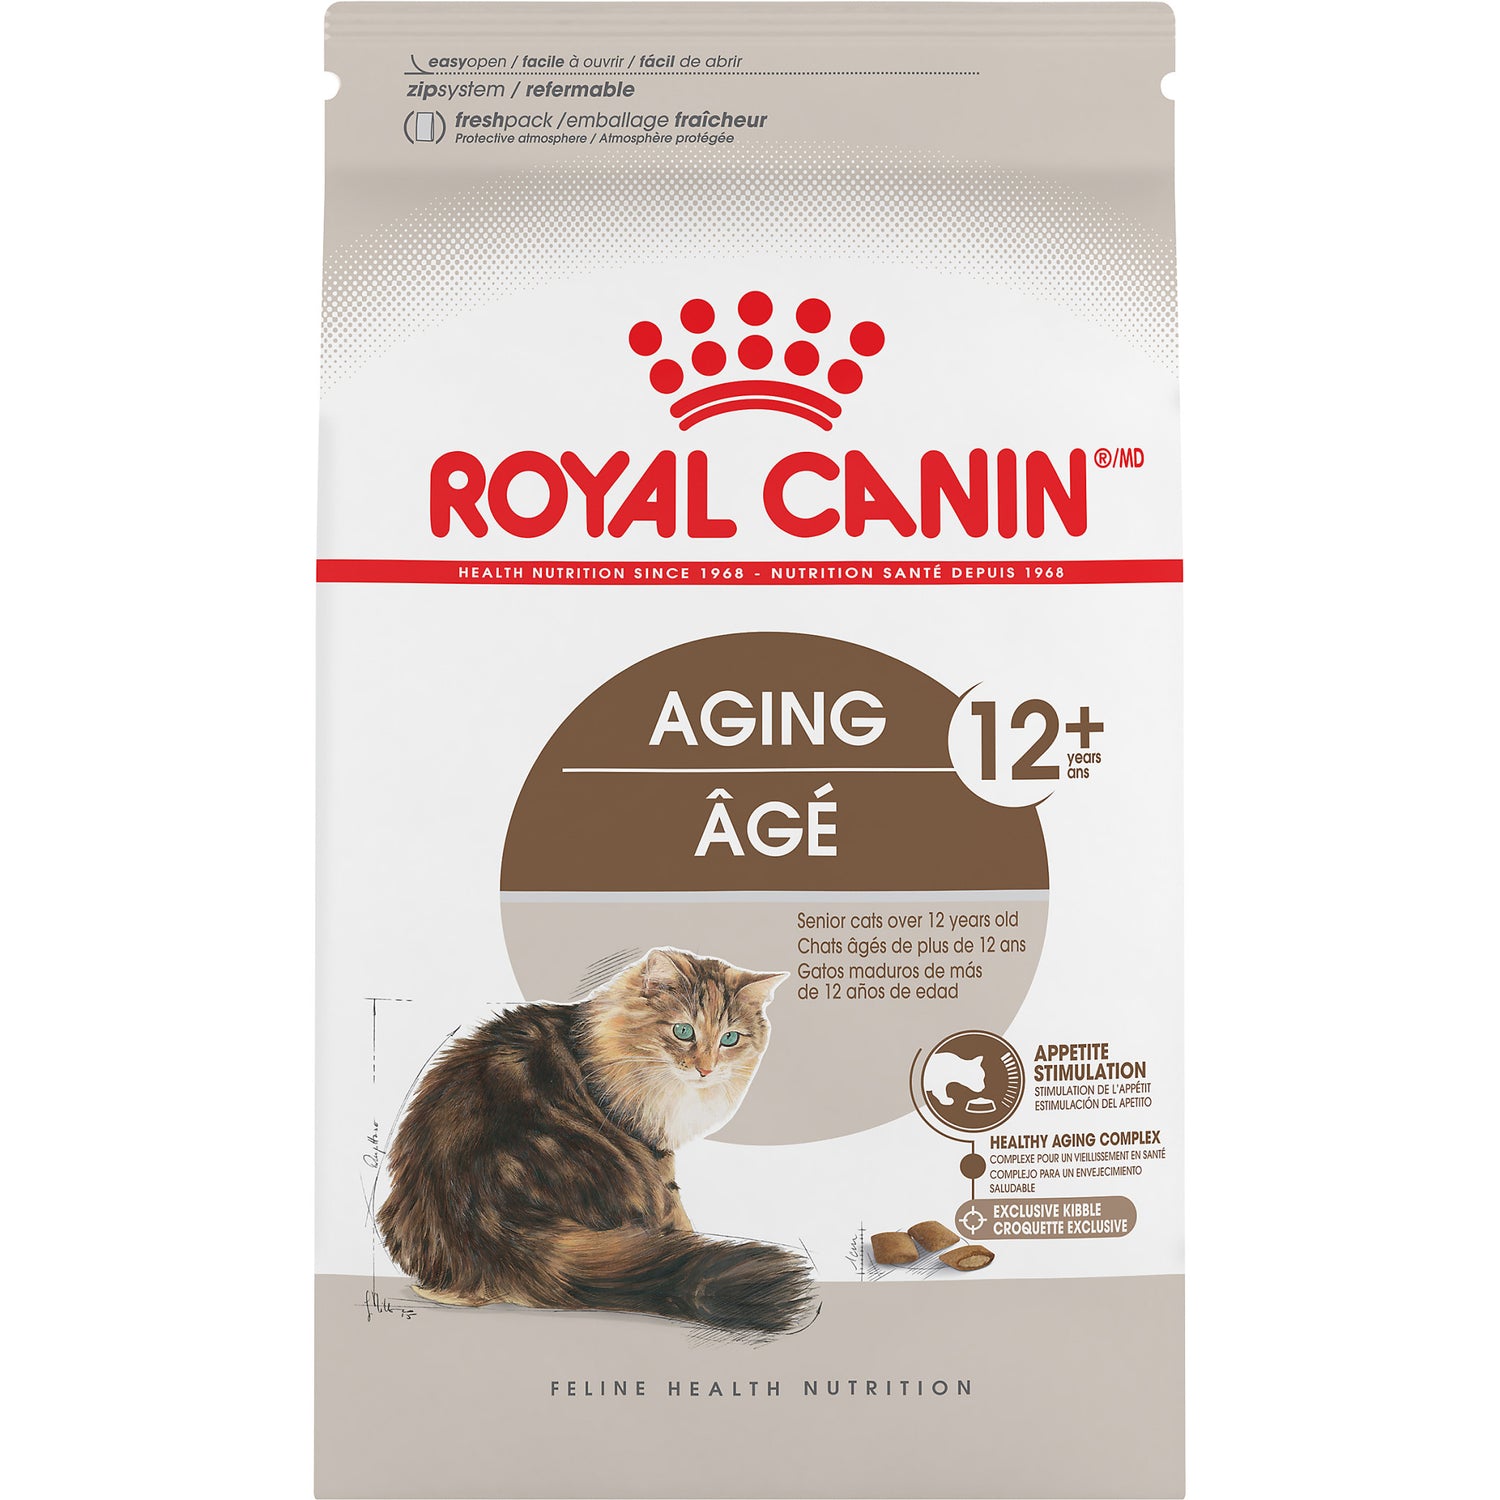 Royal Canin® Feline Health Nutrition™ Aging 12+ Dry Adult Cat Food